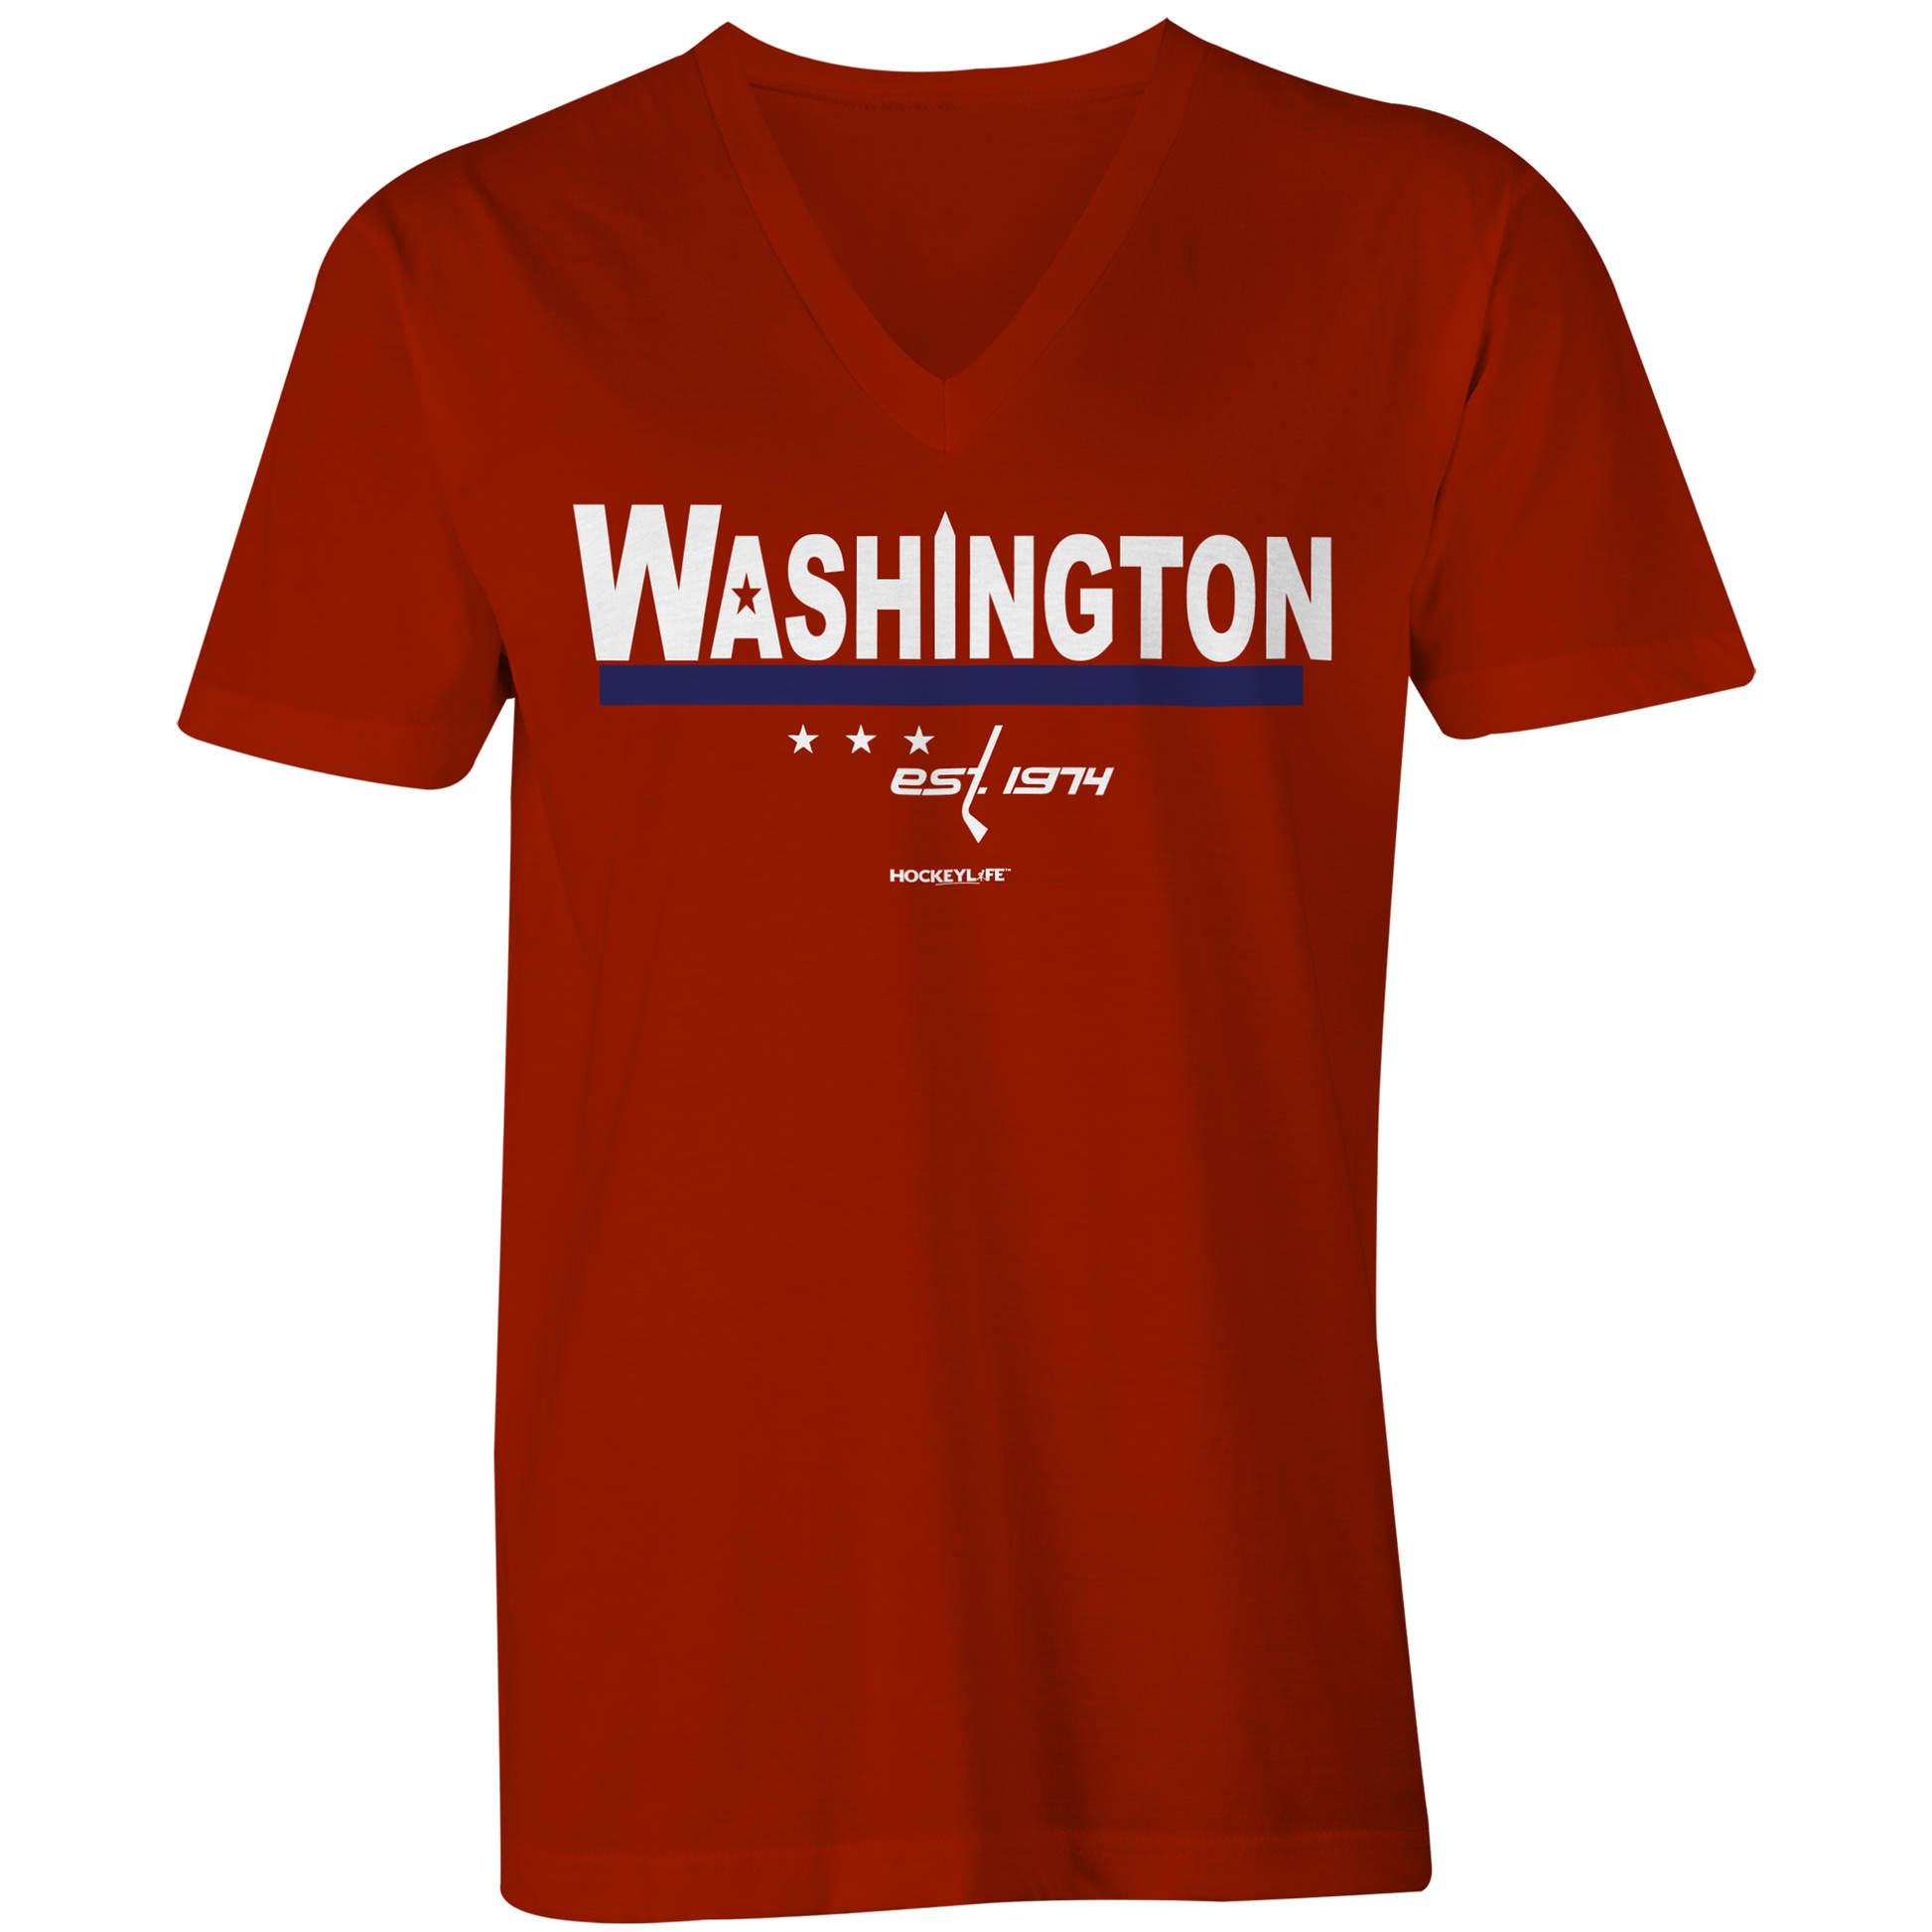 Washington Capitals Apparel, Gear, Jersey, T shirts -NHL